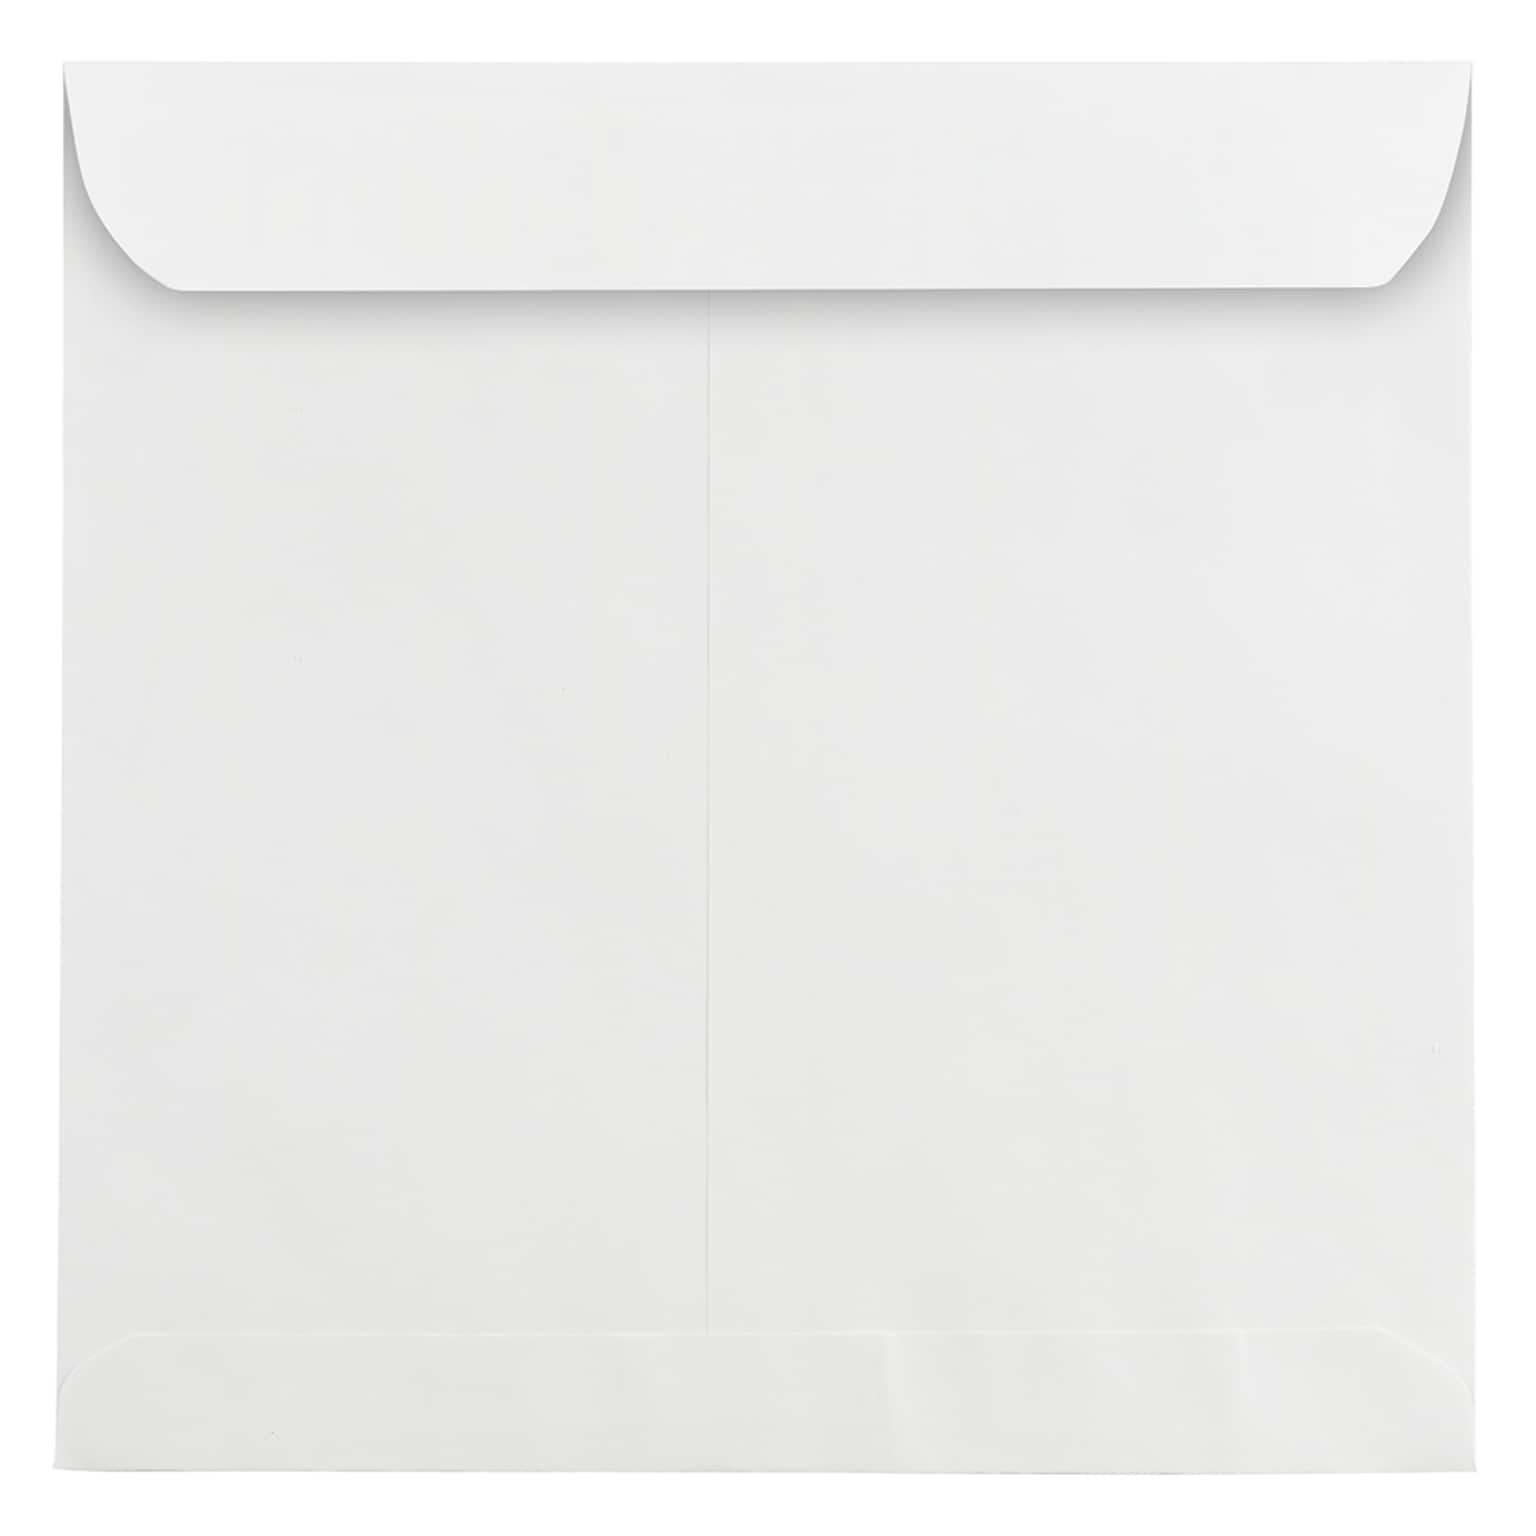 JAM Paper 12.5 x 12.5 Large Square Invitation Envelopes, White, 50/Pack (3992322I)